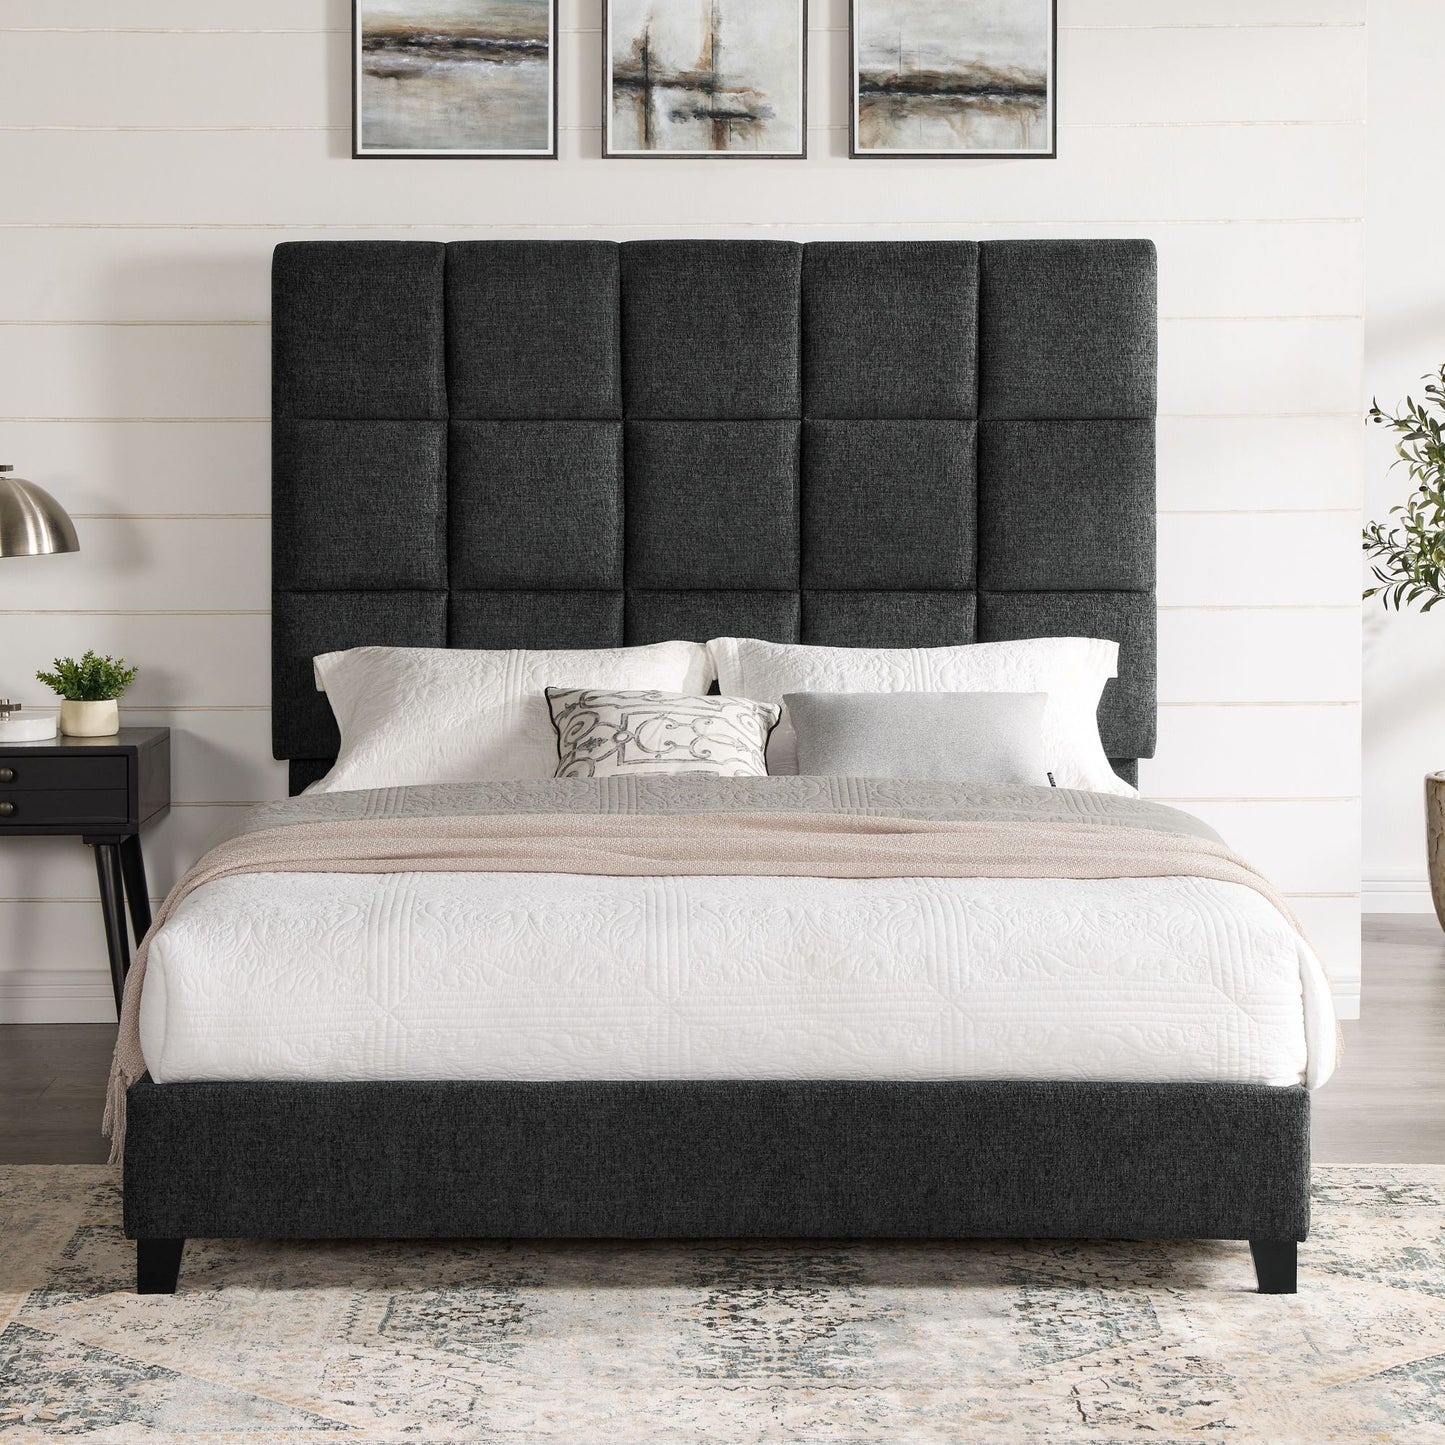 bridgevine home queen size grey squares upholstered platform bed